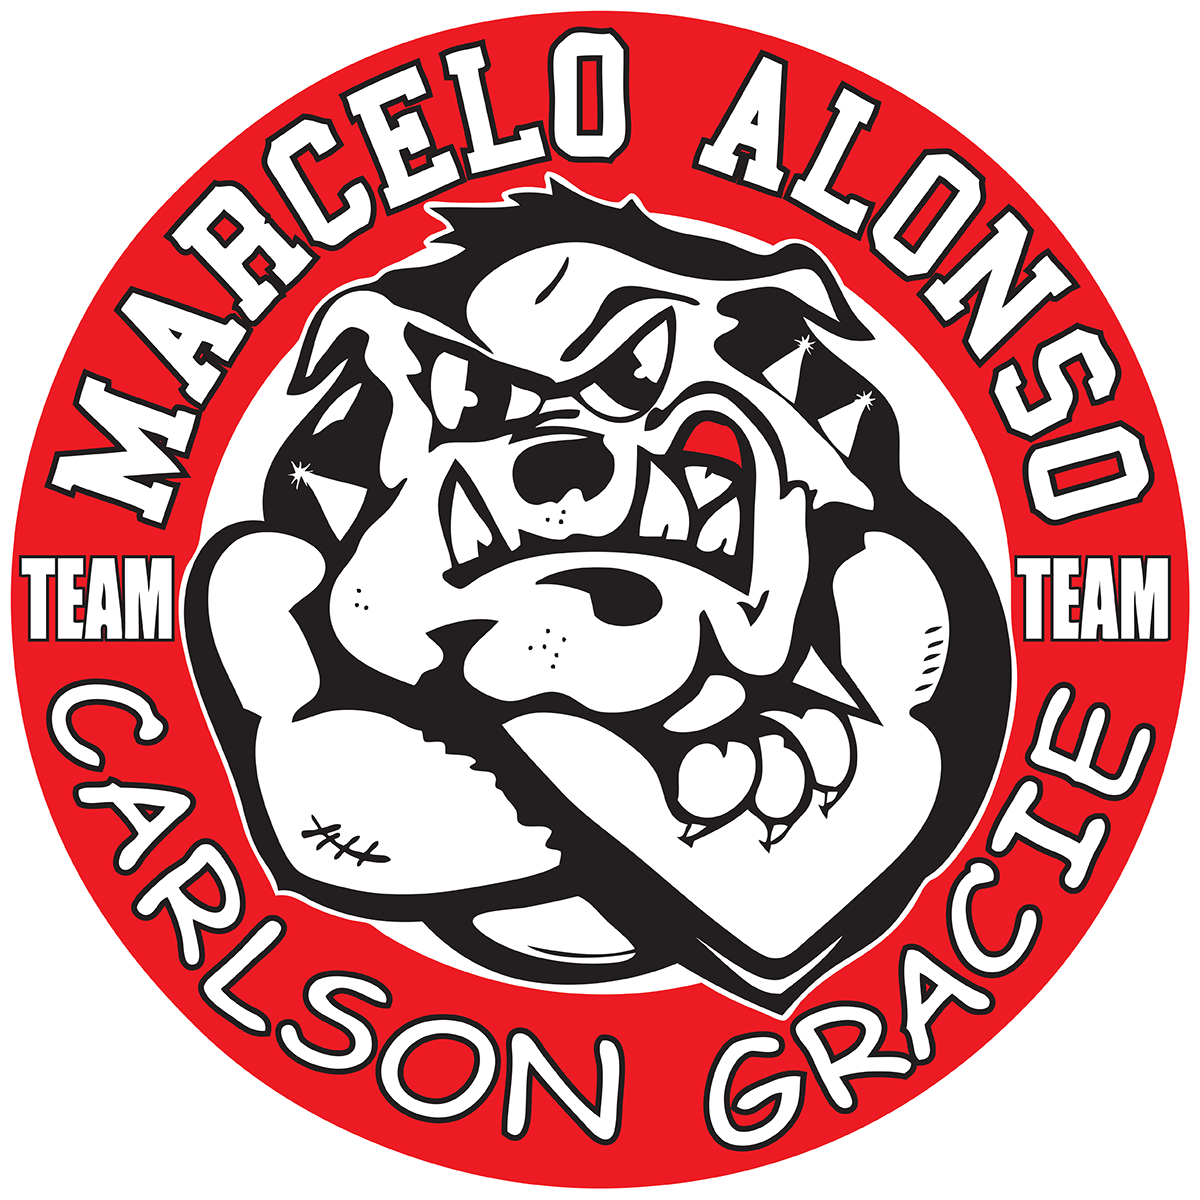 A logo for marcelo alonso team carlson gracie